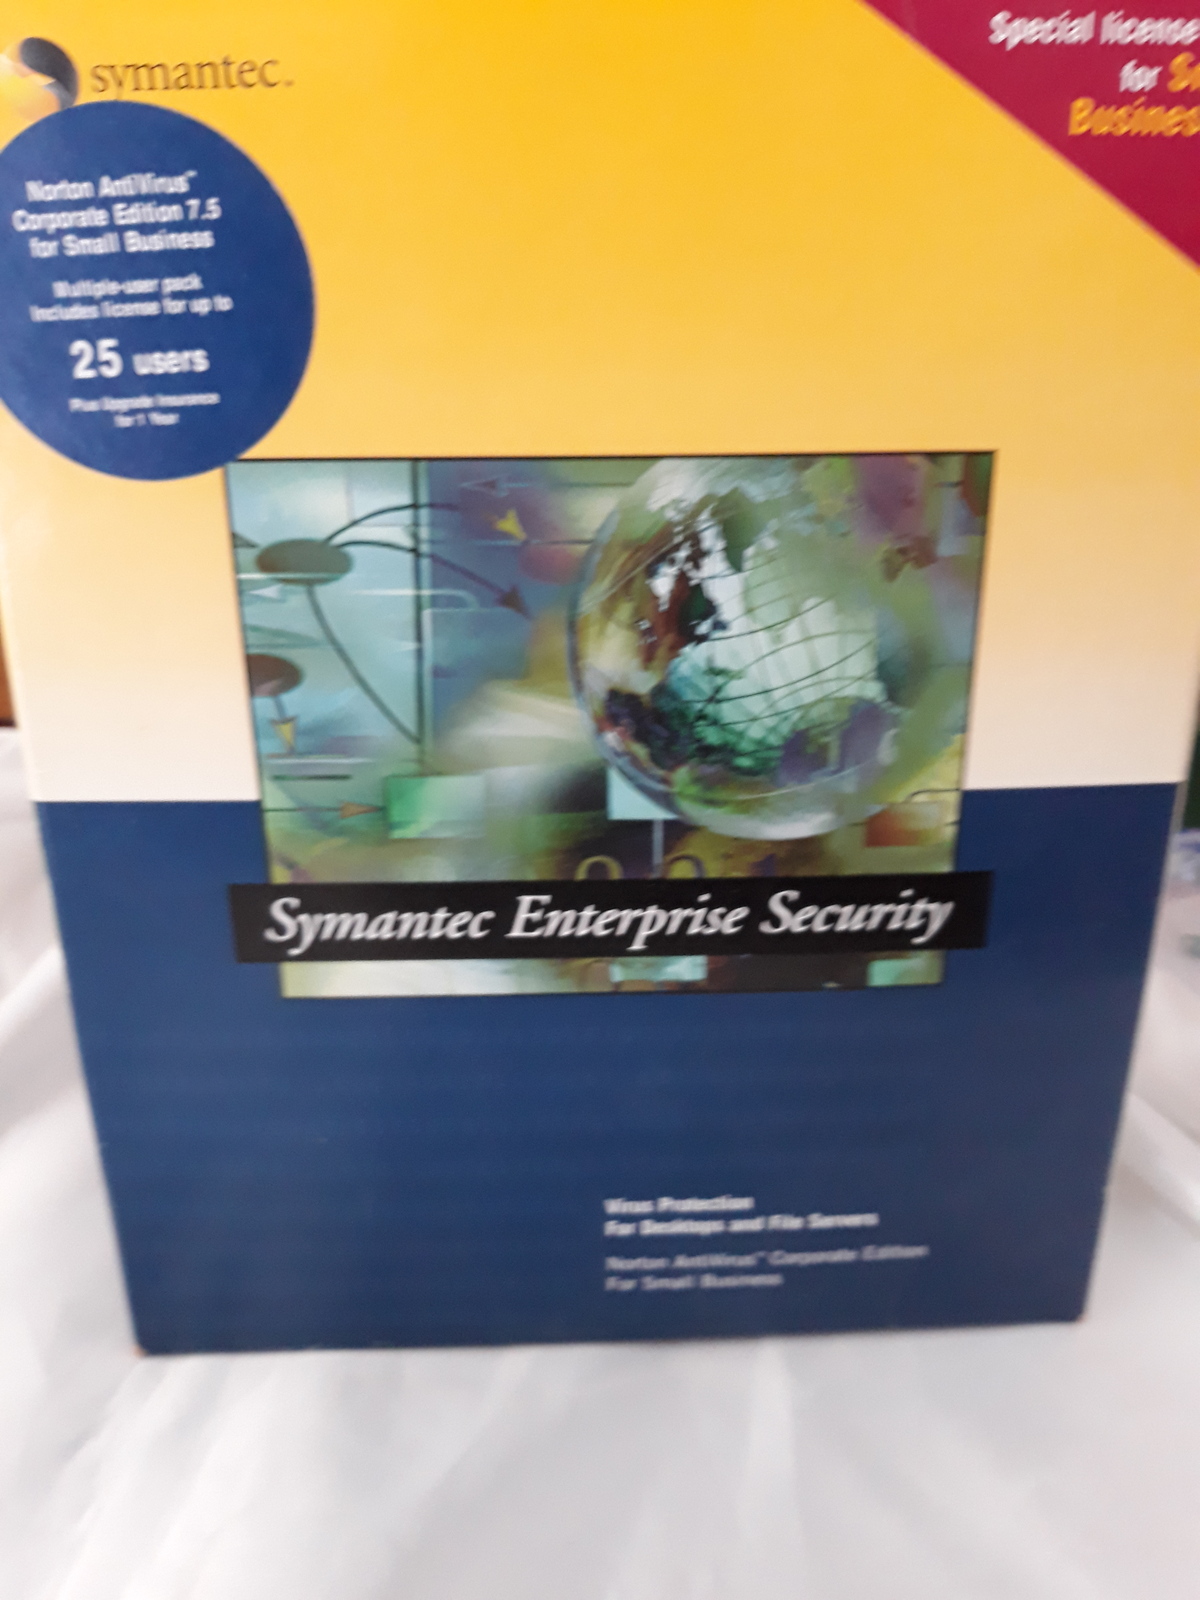 symantec small business edition